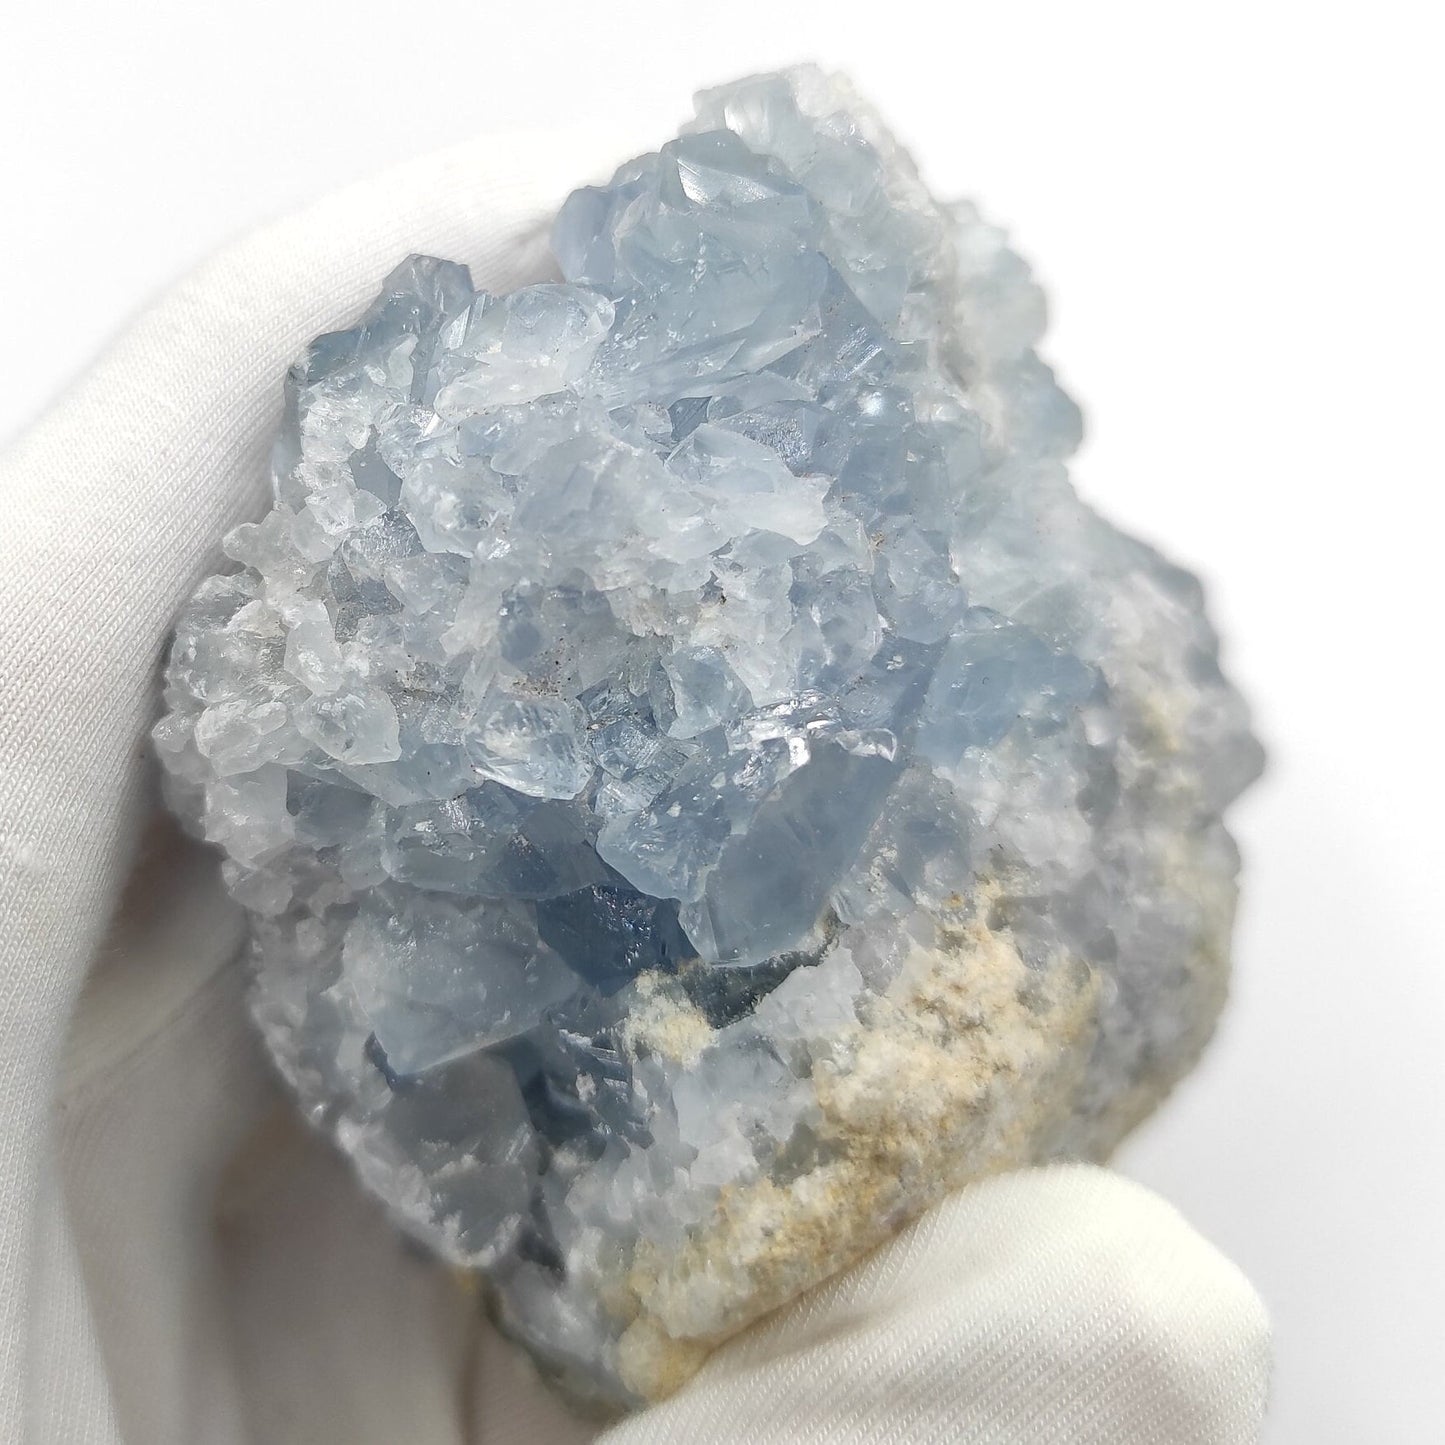 325g Blue Celestite Crystal - Mahajanga, Boeny, Madagascar - Natural Blue Celeste - Mineral Specimen - Crystal Cluster - Raw Blue Crystals